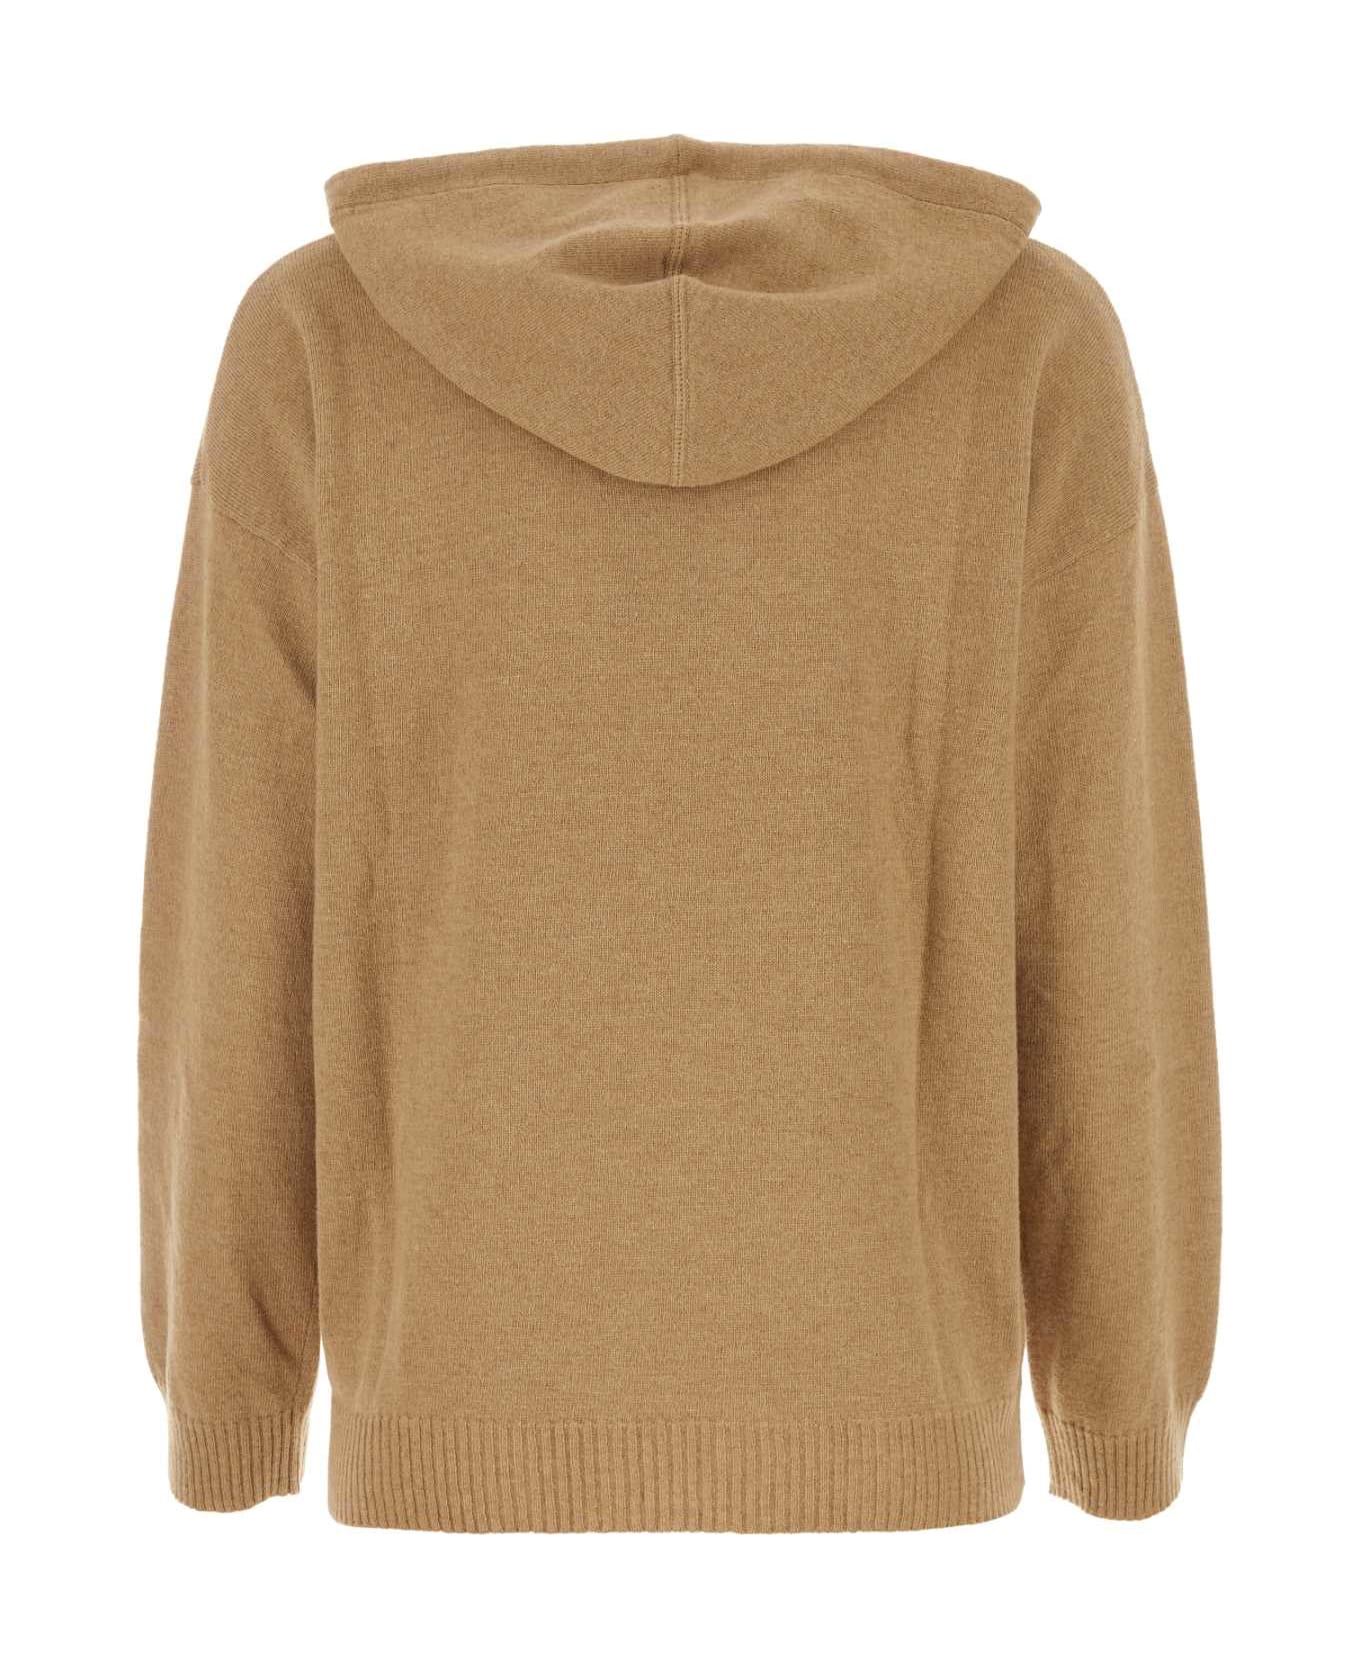 Woolrich Camel Nylon Blend Sweater - SUEDEBROWN